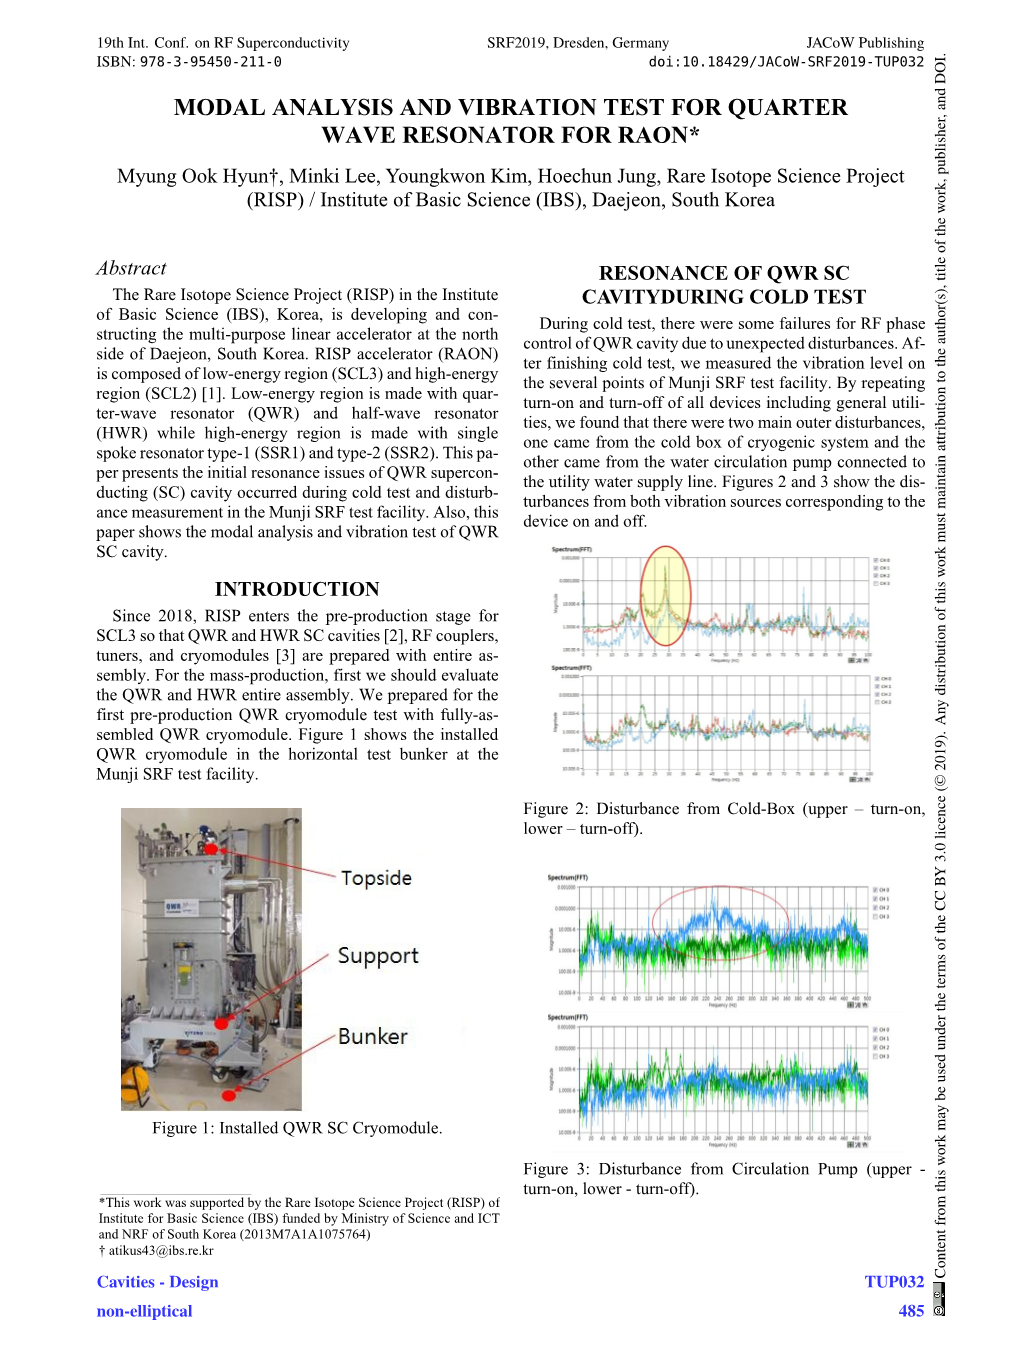 Modal Analysis and Vibration Test for Quarter Wave Resonator for RAON